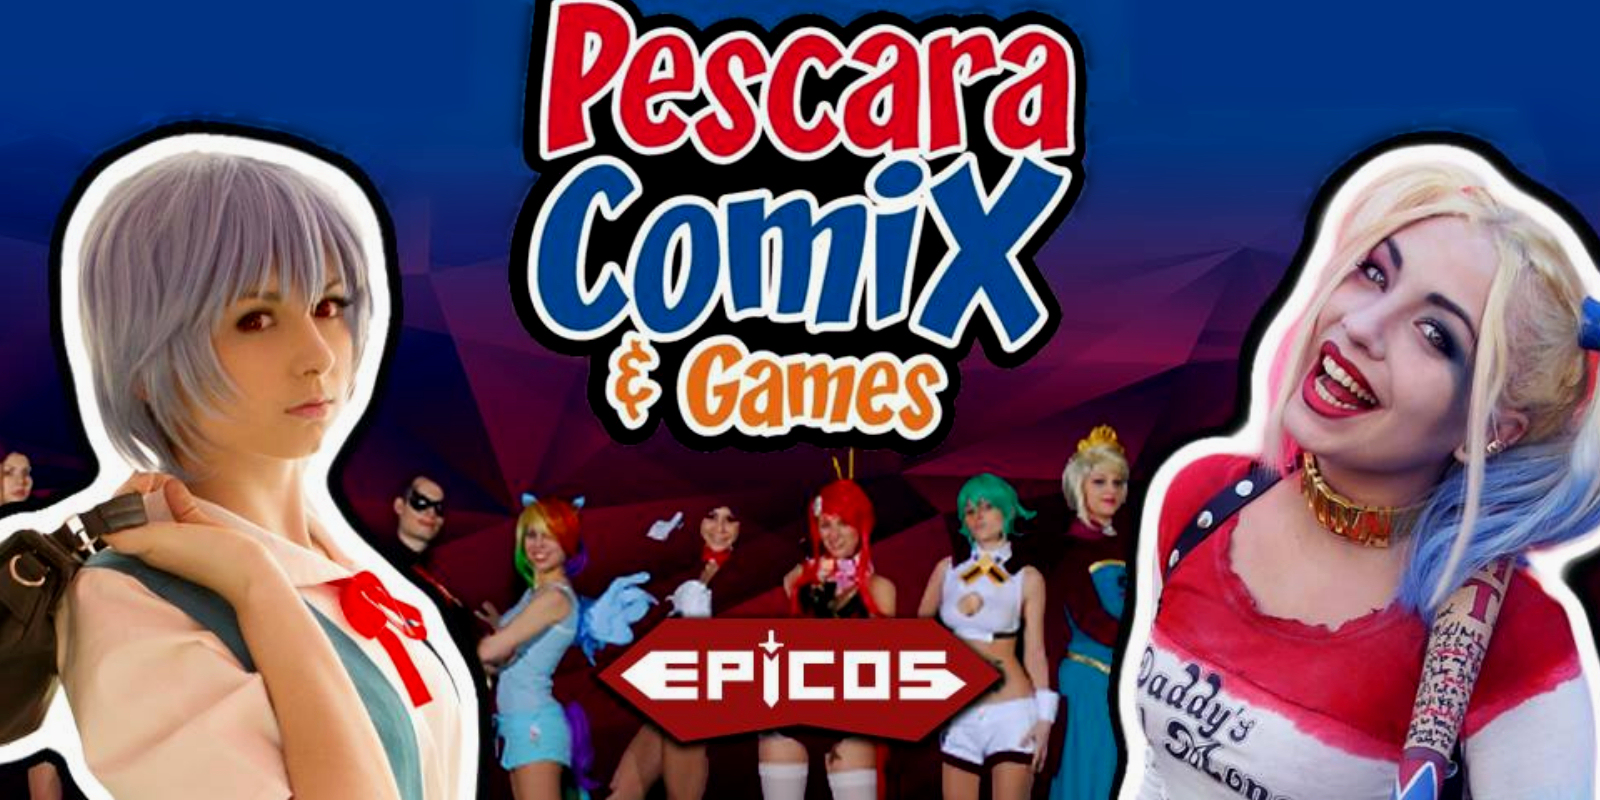 Cosplay Contest di Pescara Comix & Games 2017